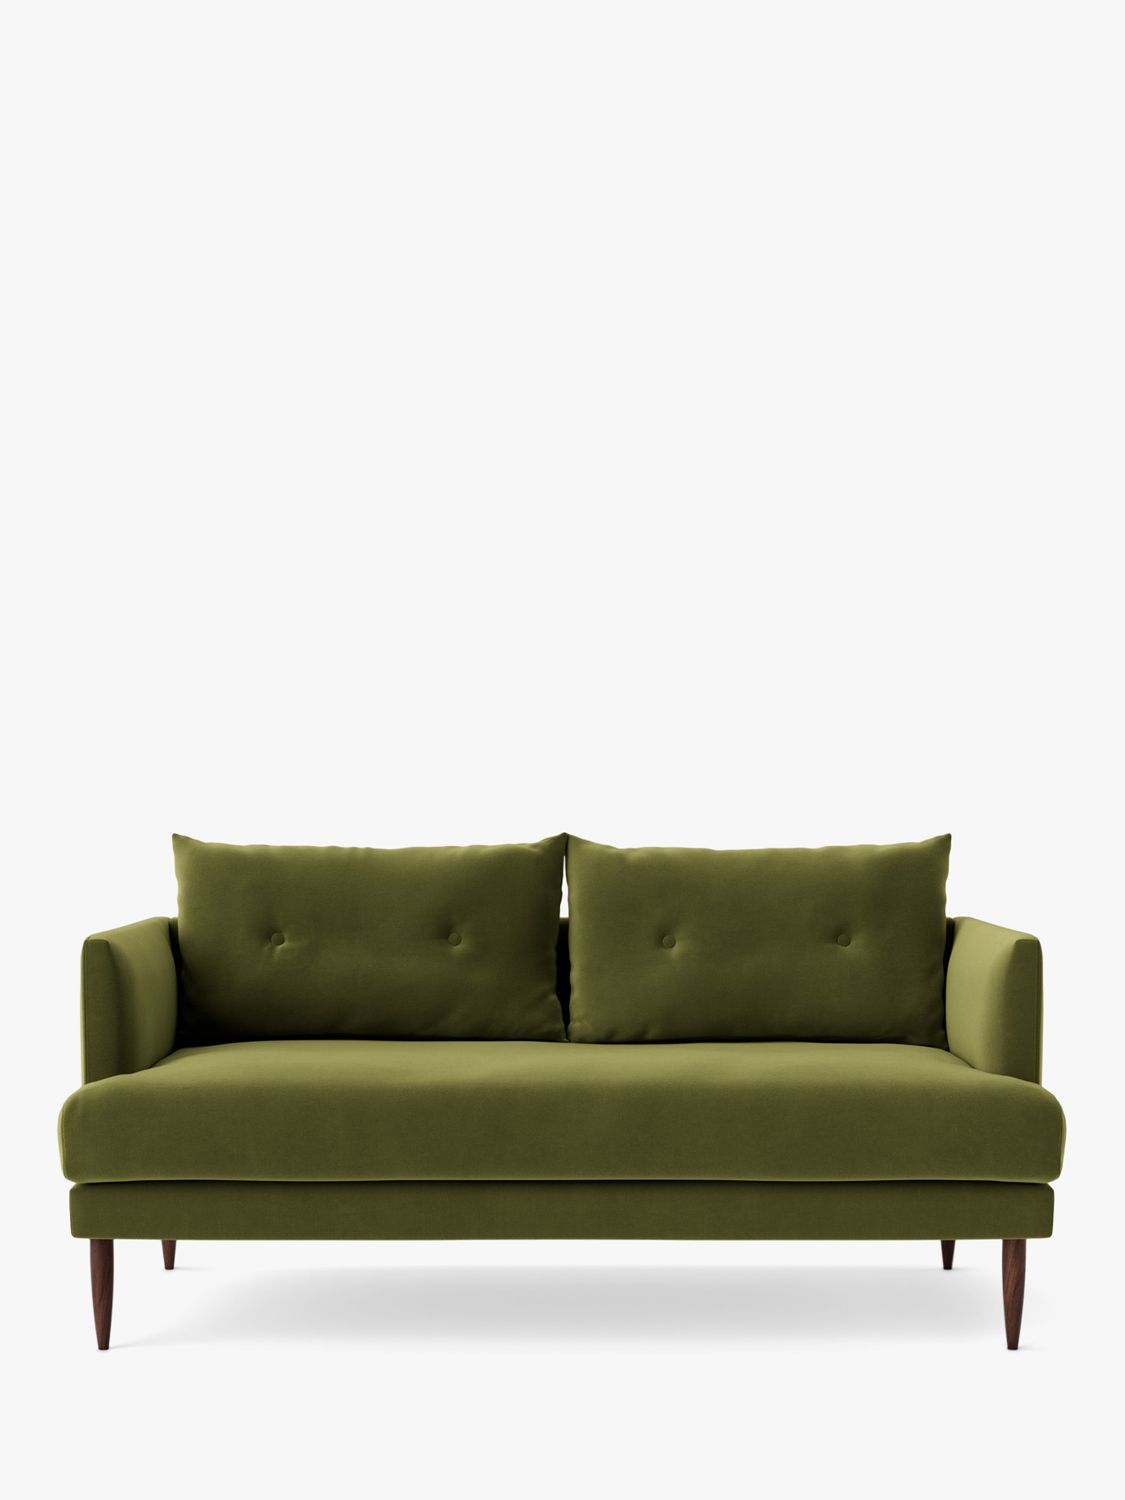 Kalmar Range, Swoon Kalmar Medium 2 Seater Sofa, Dark Leg, Fern Velvet